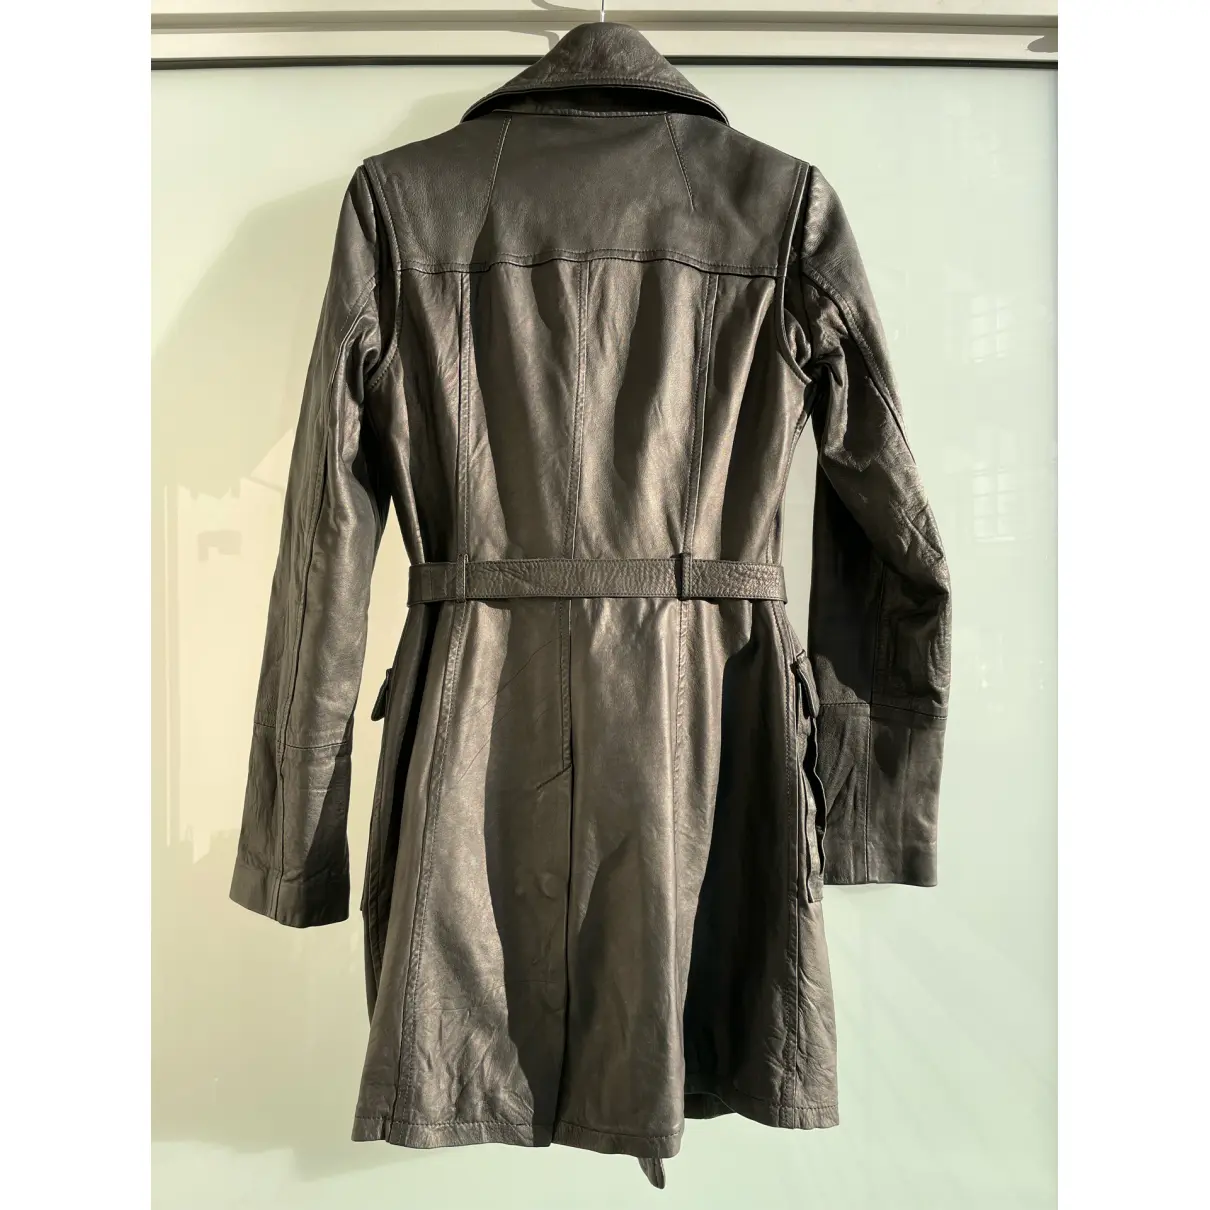 Buy Patrizia Pepe Leather trench coat online